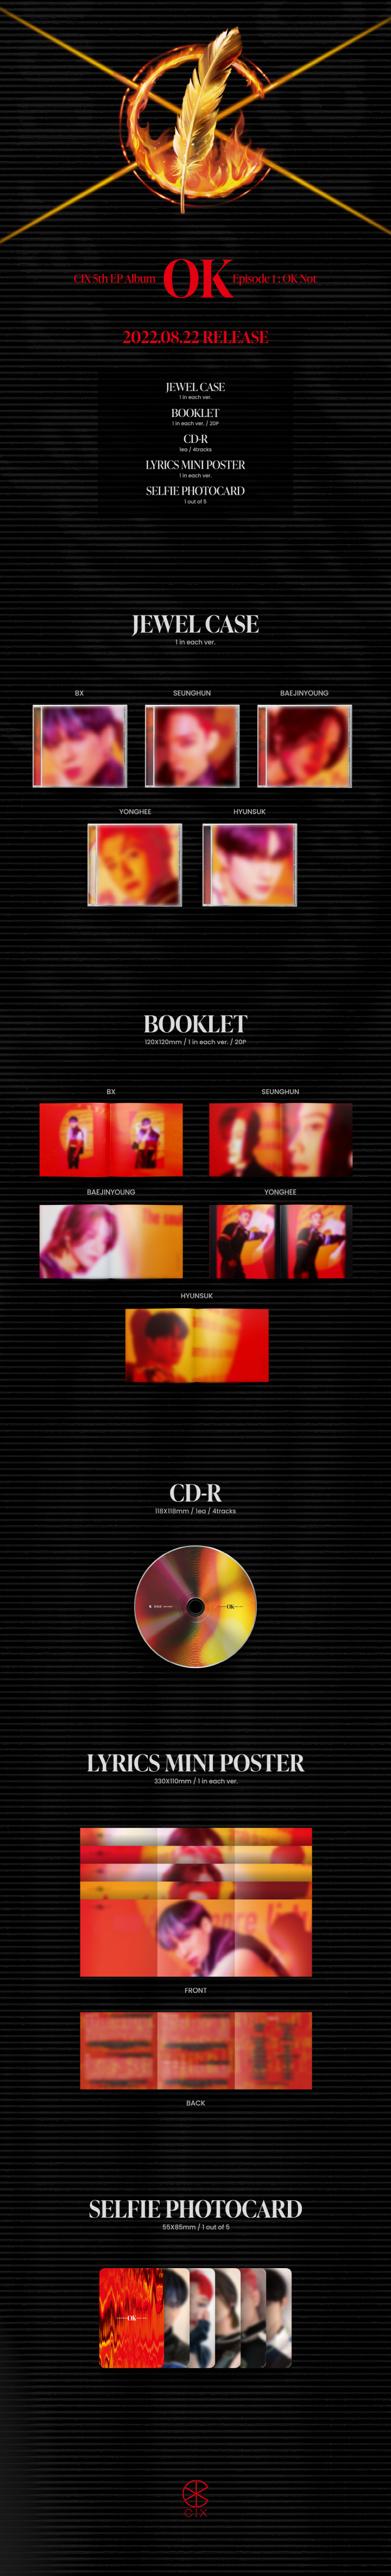 CIX - 5th EP ALBUM [OK Episode 1 OK Not] Hyunsuk ver